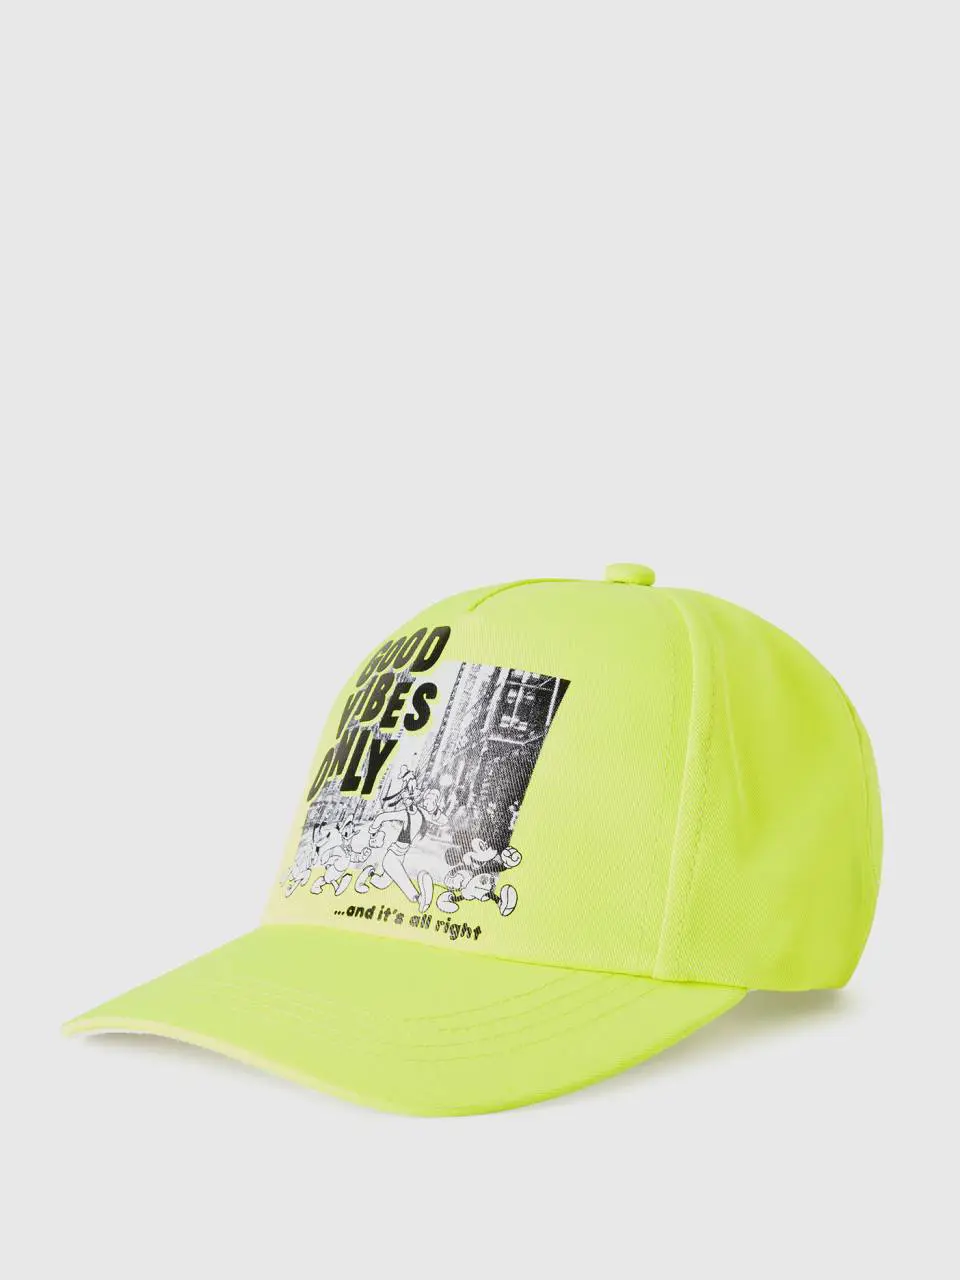 Benetton yellow baseball cap with disney print. 1